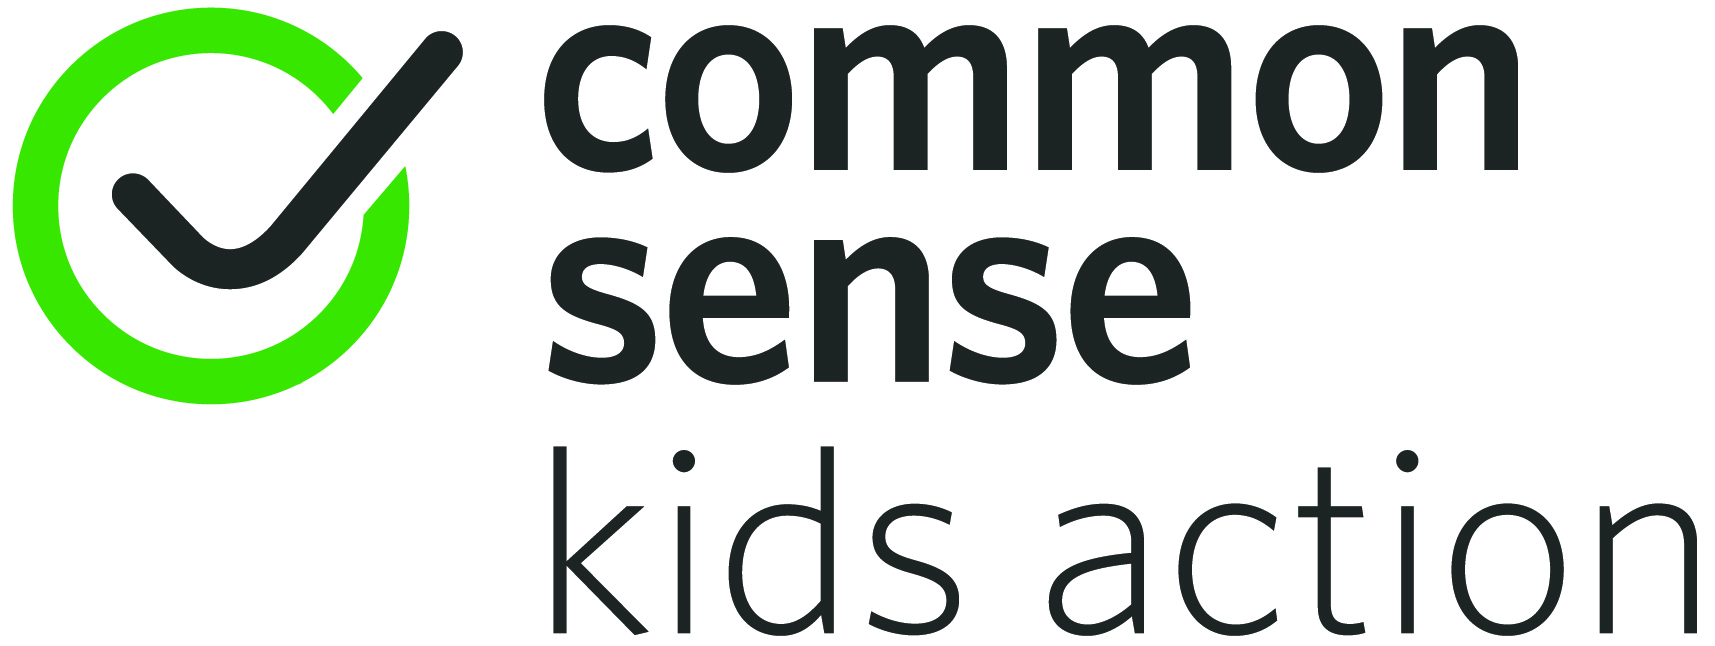 Common_Sense_KidsAction